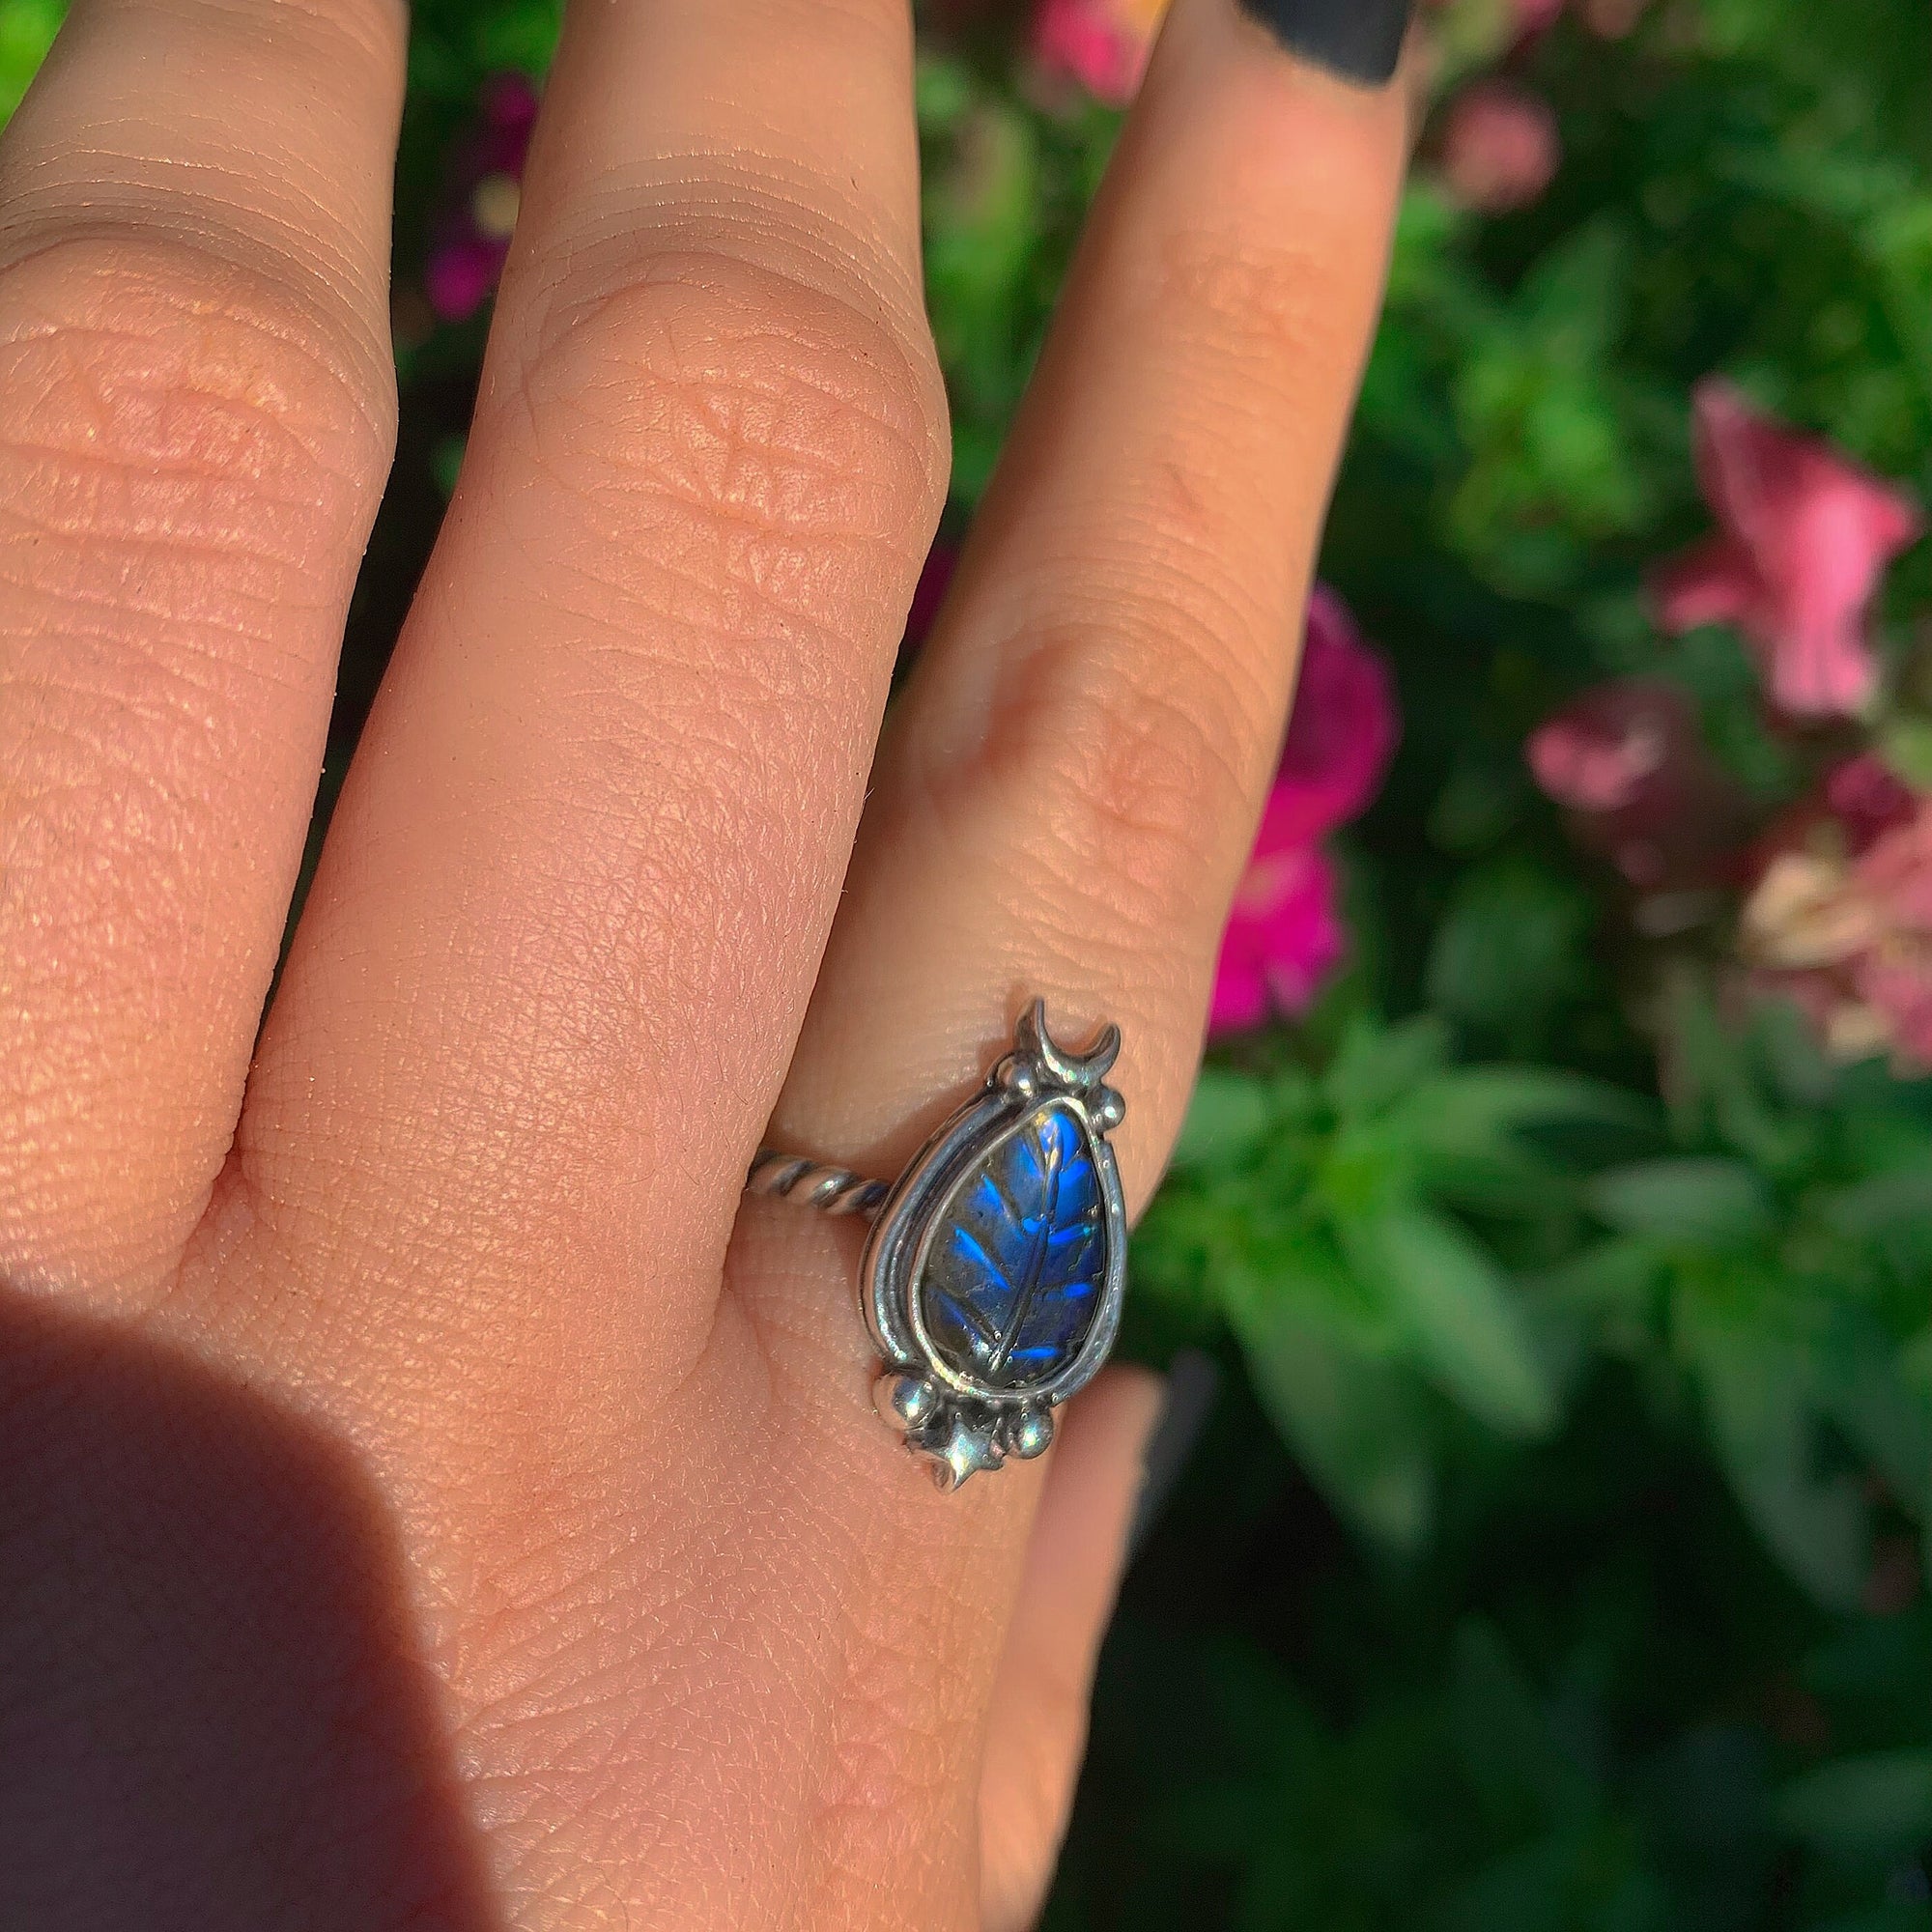 Labradorite Leaf Ring - Size 7 - Sterling Silver - Leaf Labradorite Ring - Blue Labradorite Crescent Moon Ring - Labradorite Star Jewelry